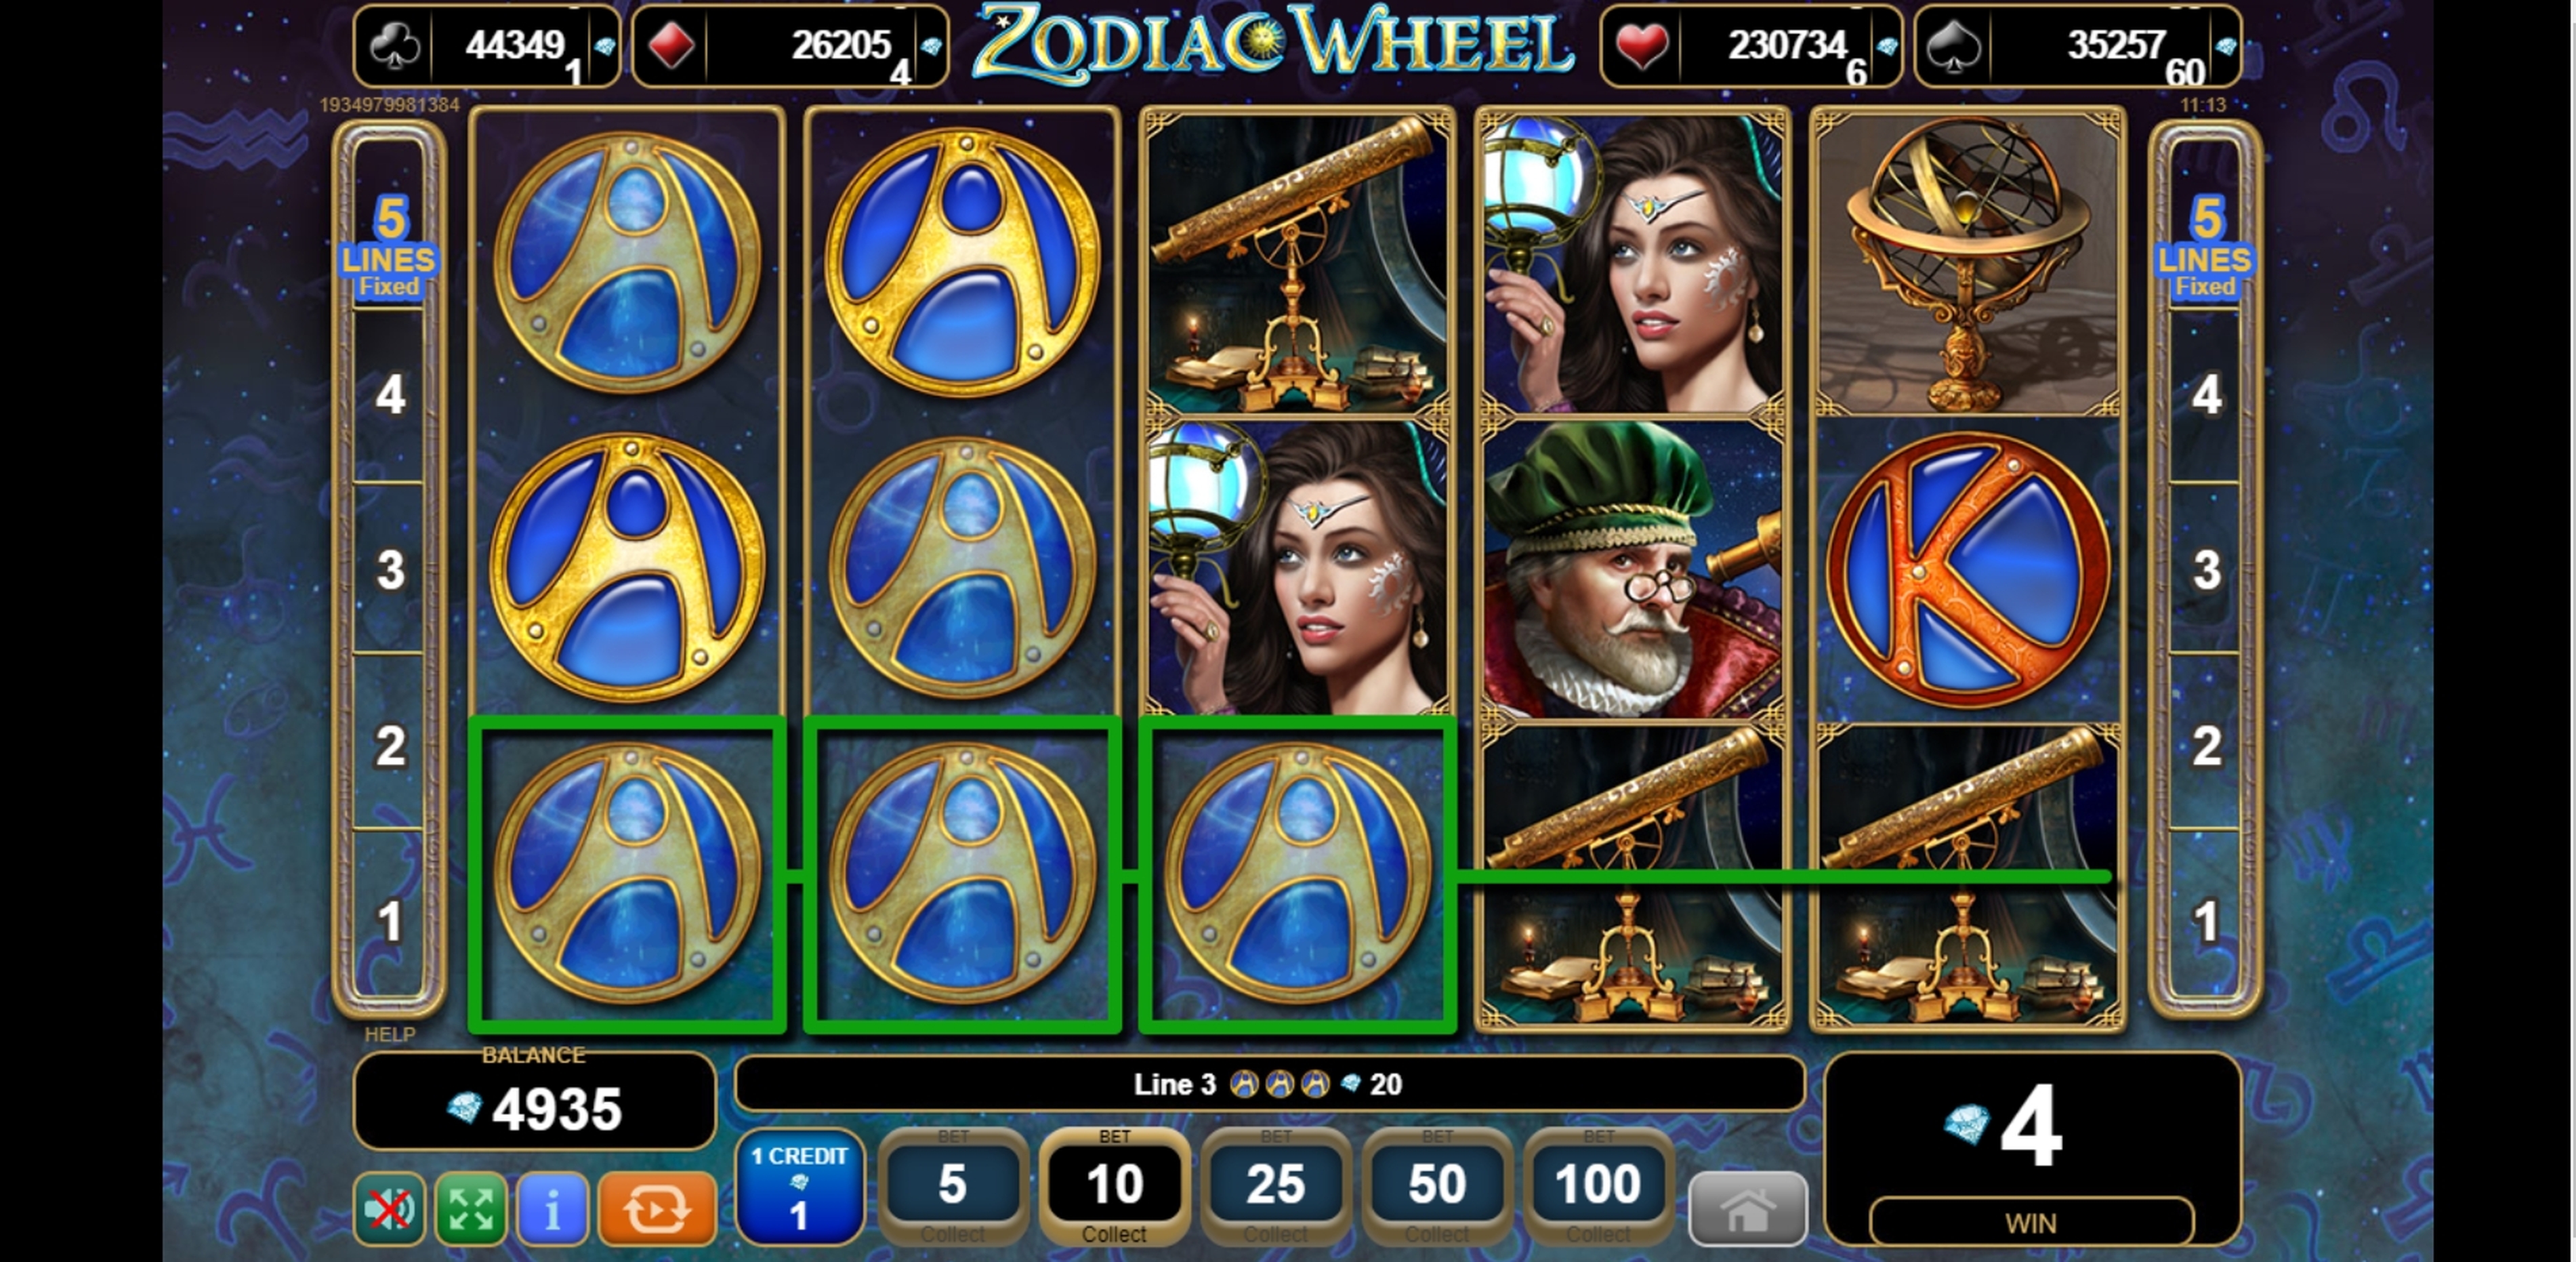 Win Money in Zodiac Wheel Free Slot Game by EGT